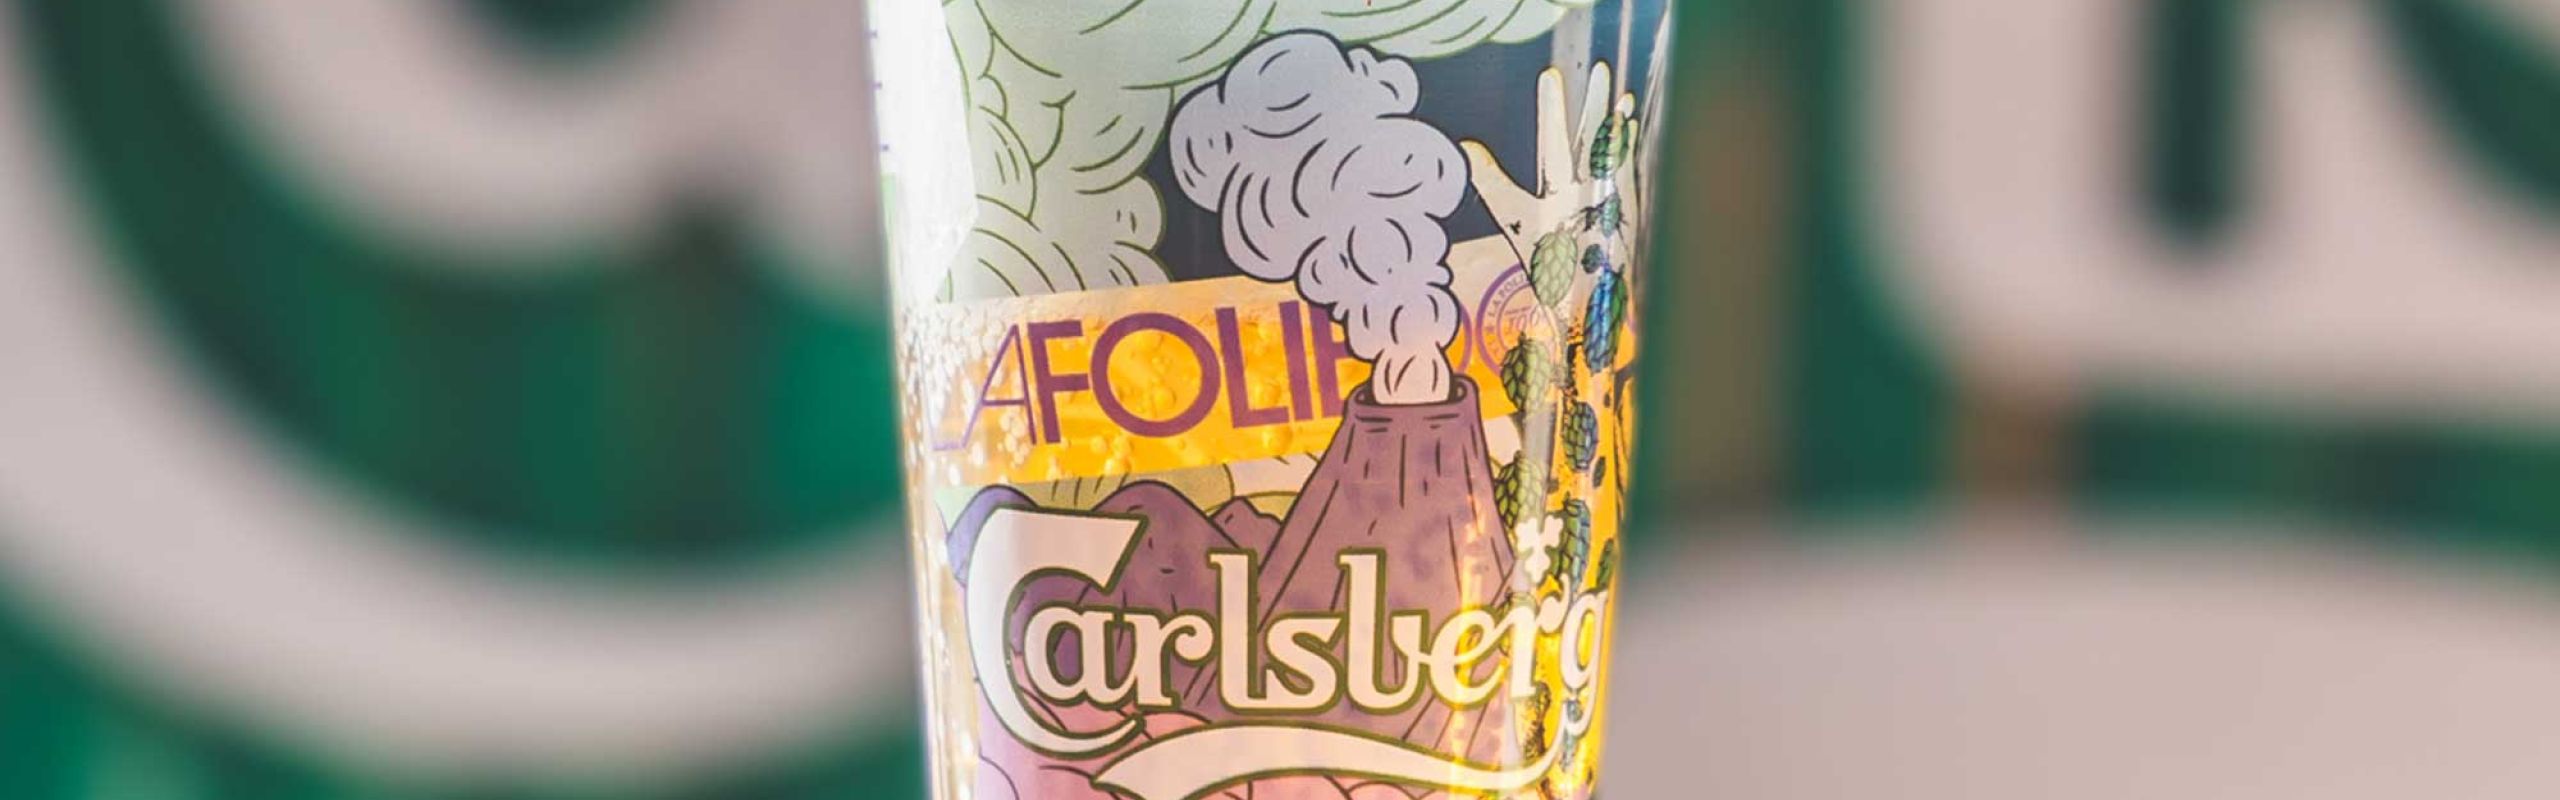 Carlsberg and La Folie Douce : An Ecological Partnership